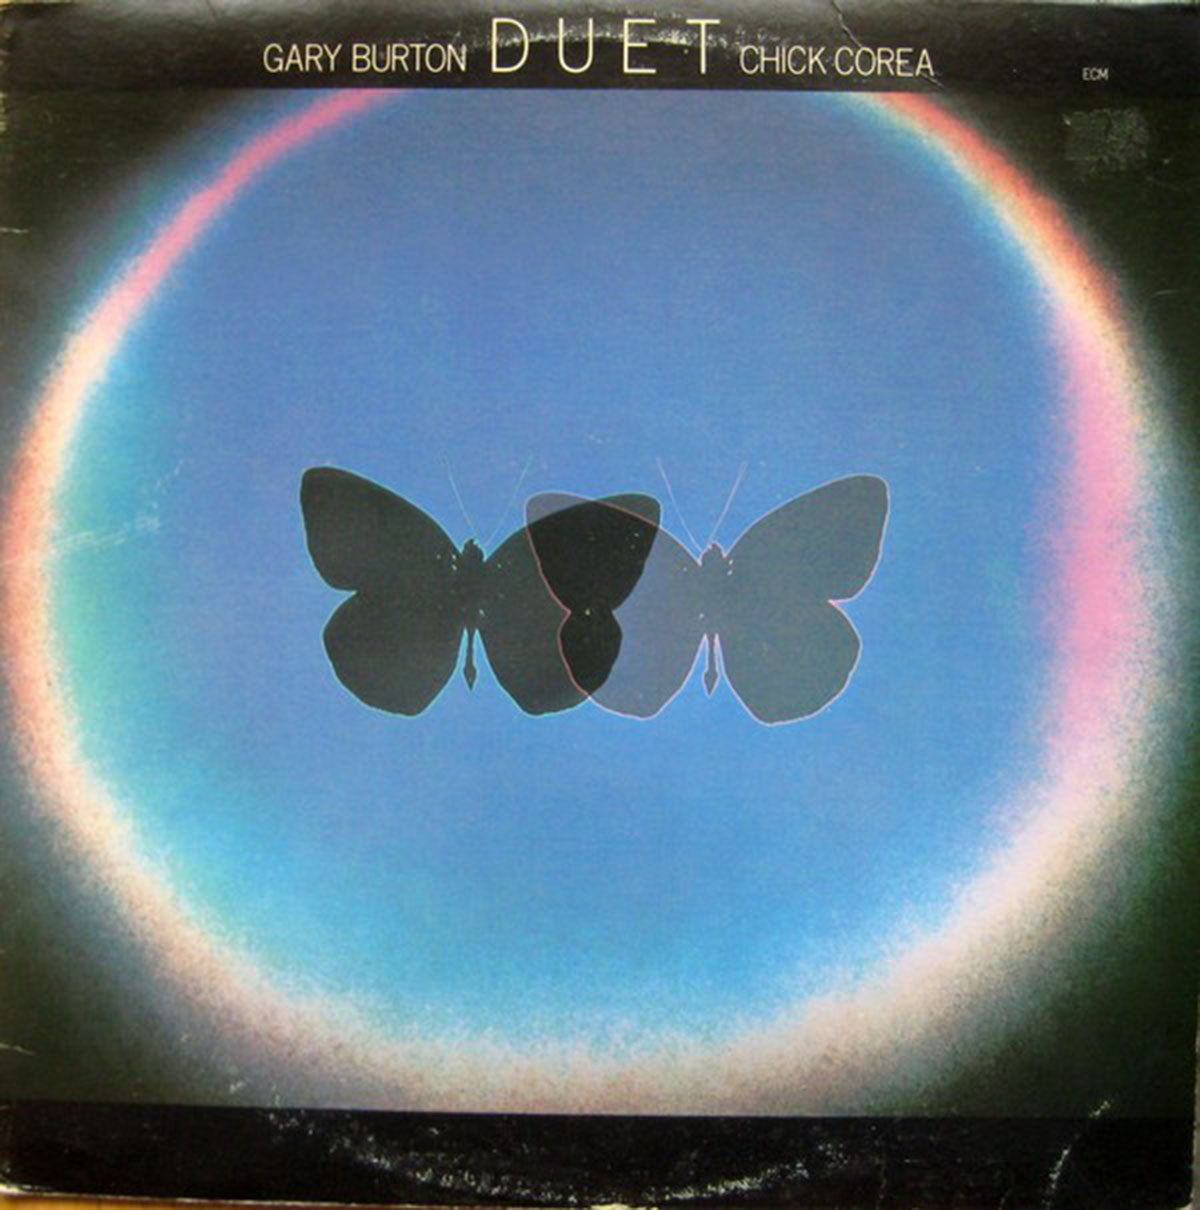 Gary Burton / Chick Corea ‎– Duet - 1979 US Pressing